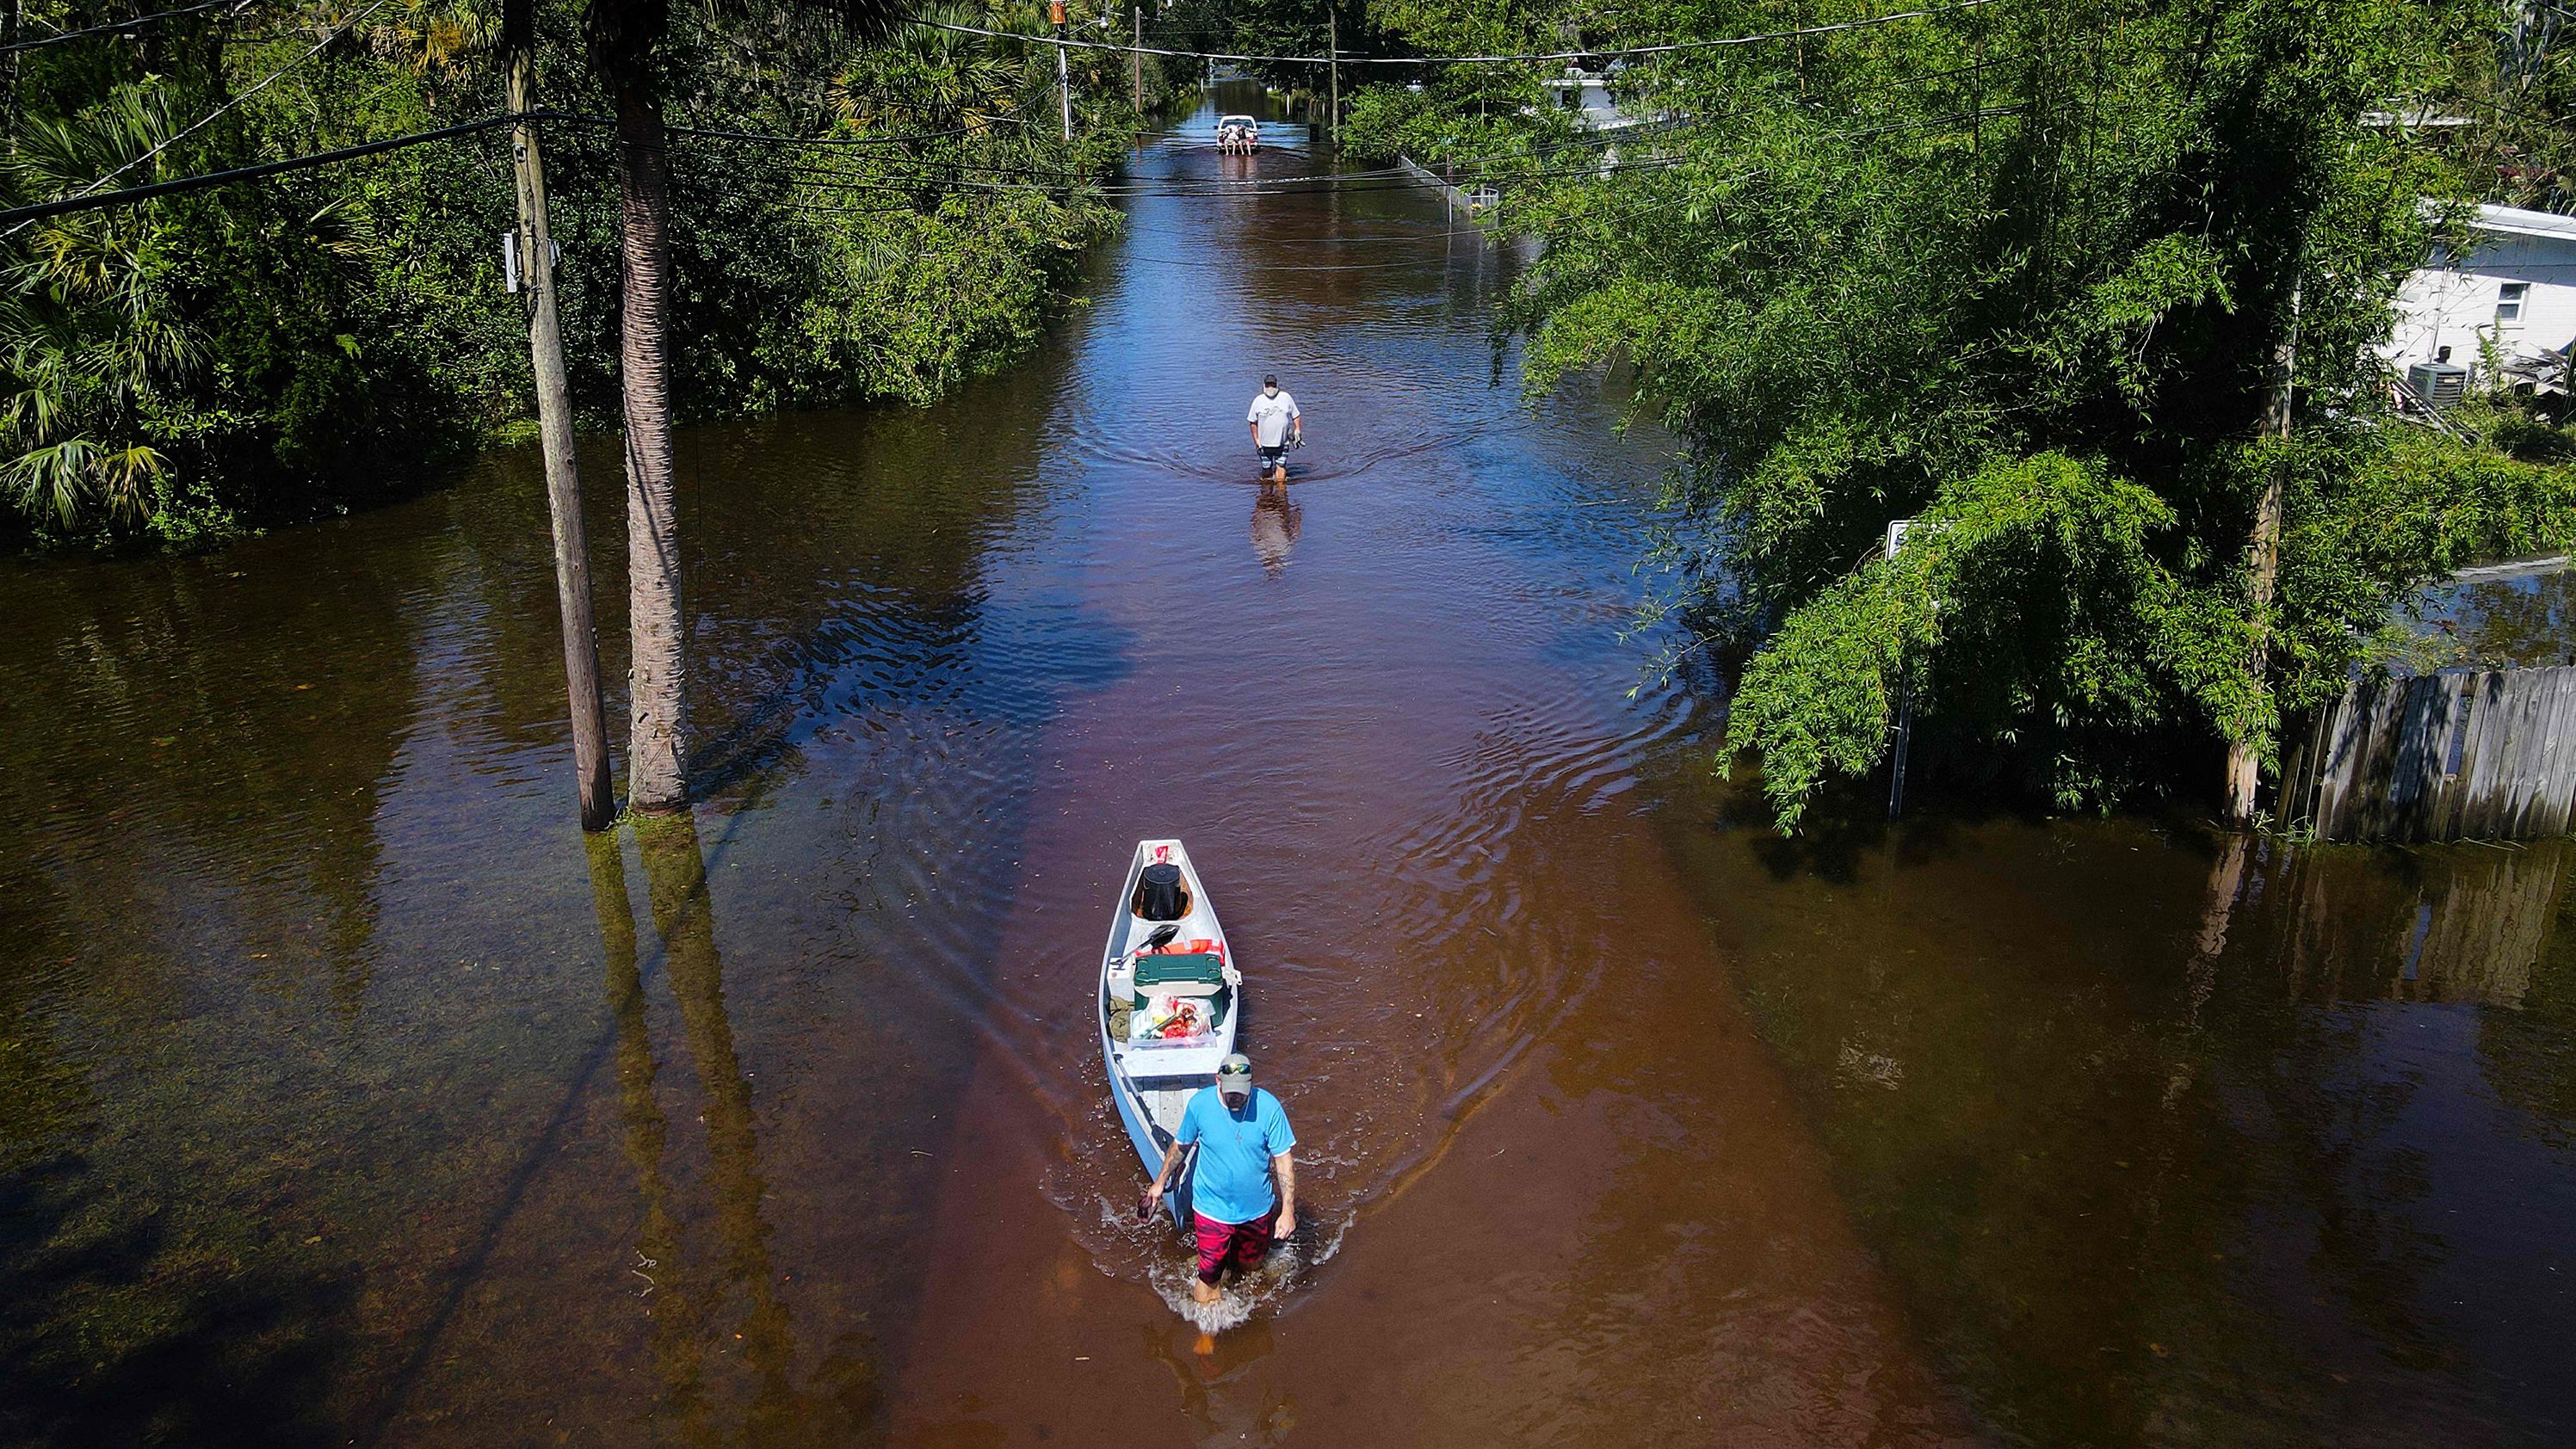 A man pulls a canoe through a flooded street of his neighborhood in New Smyrna Beach, Florida, after Hurricane Ian slammed the area in September.